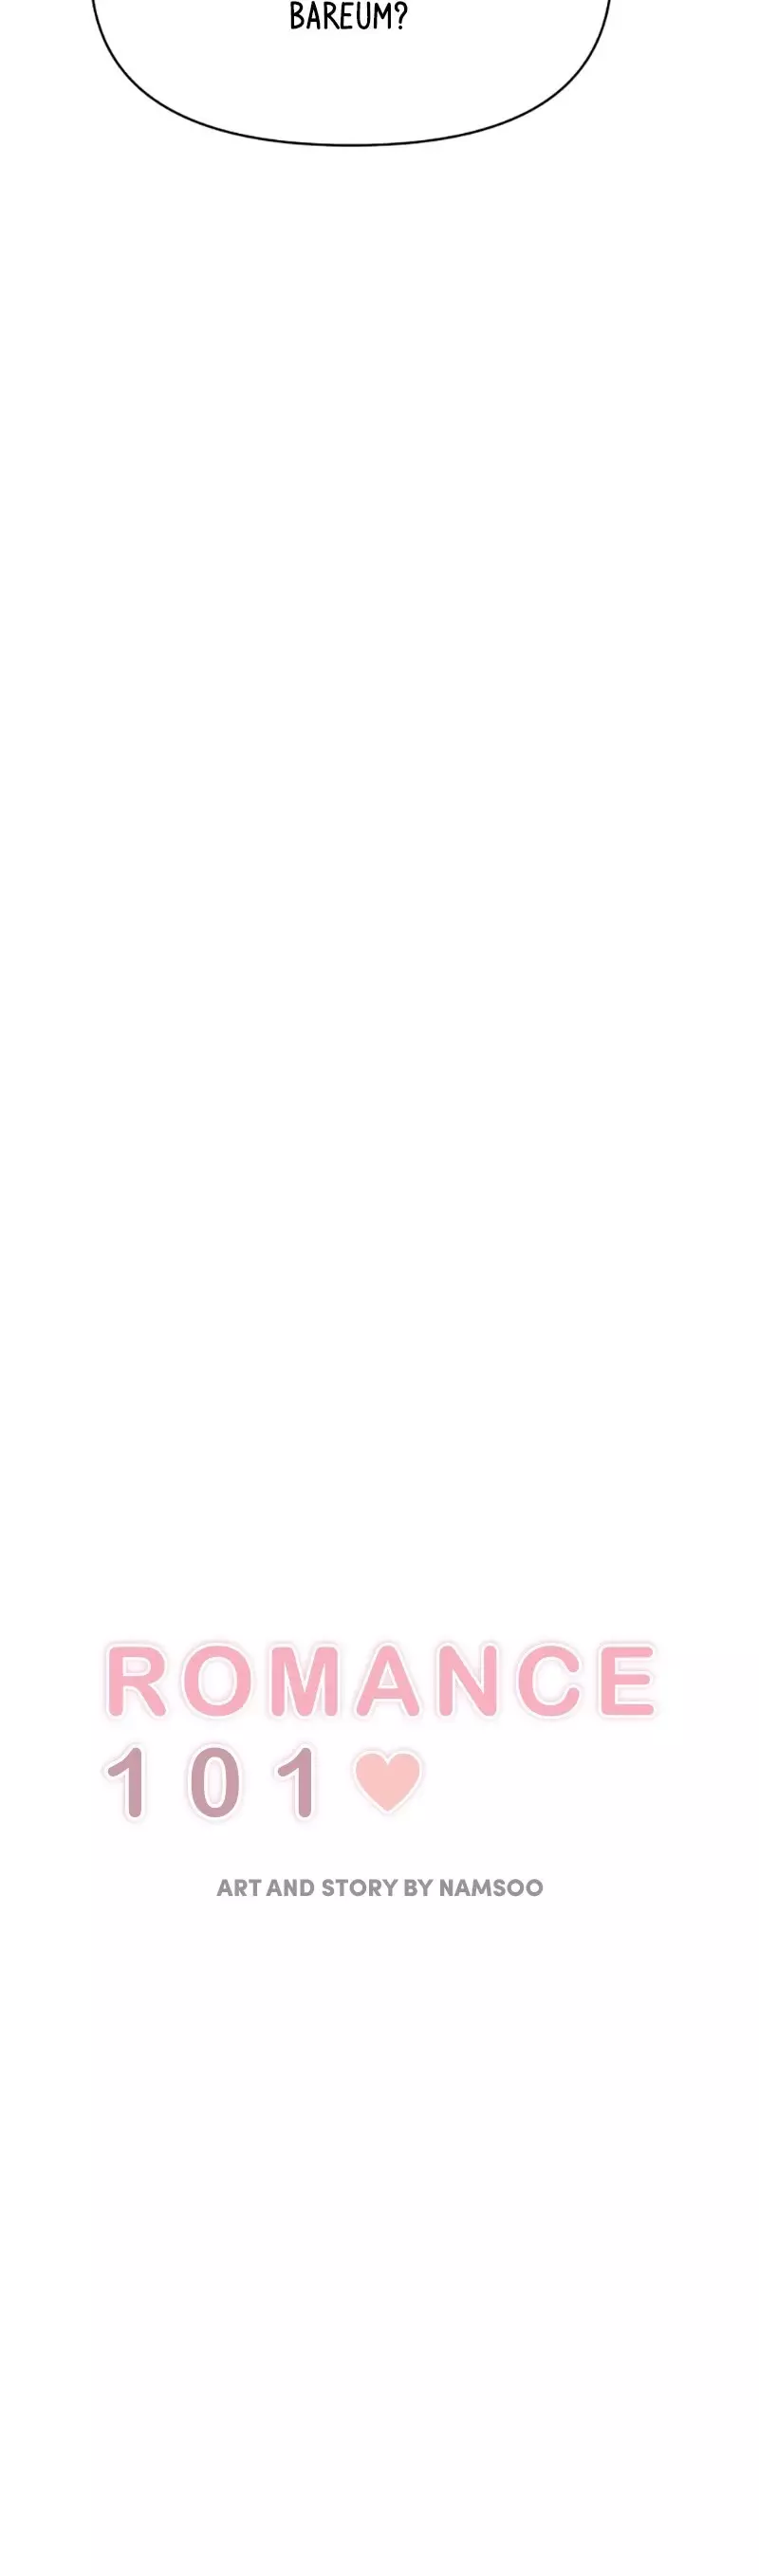 Romance 101 - 123 page 16-805ccce2